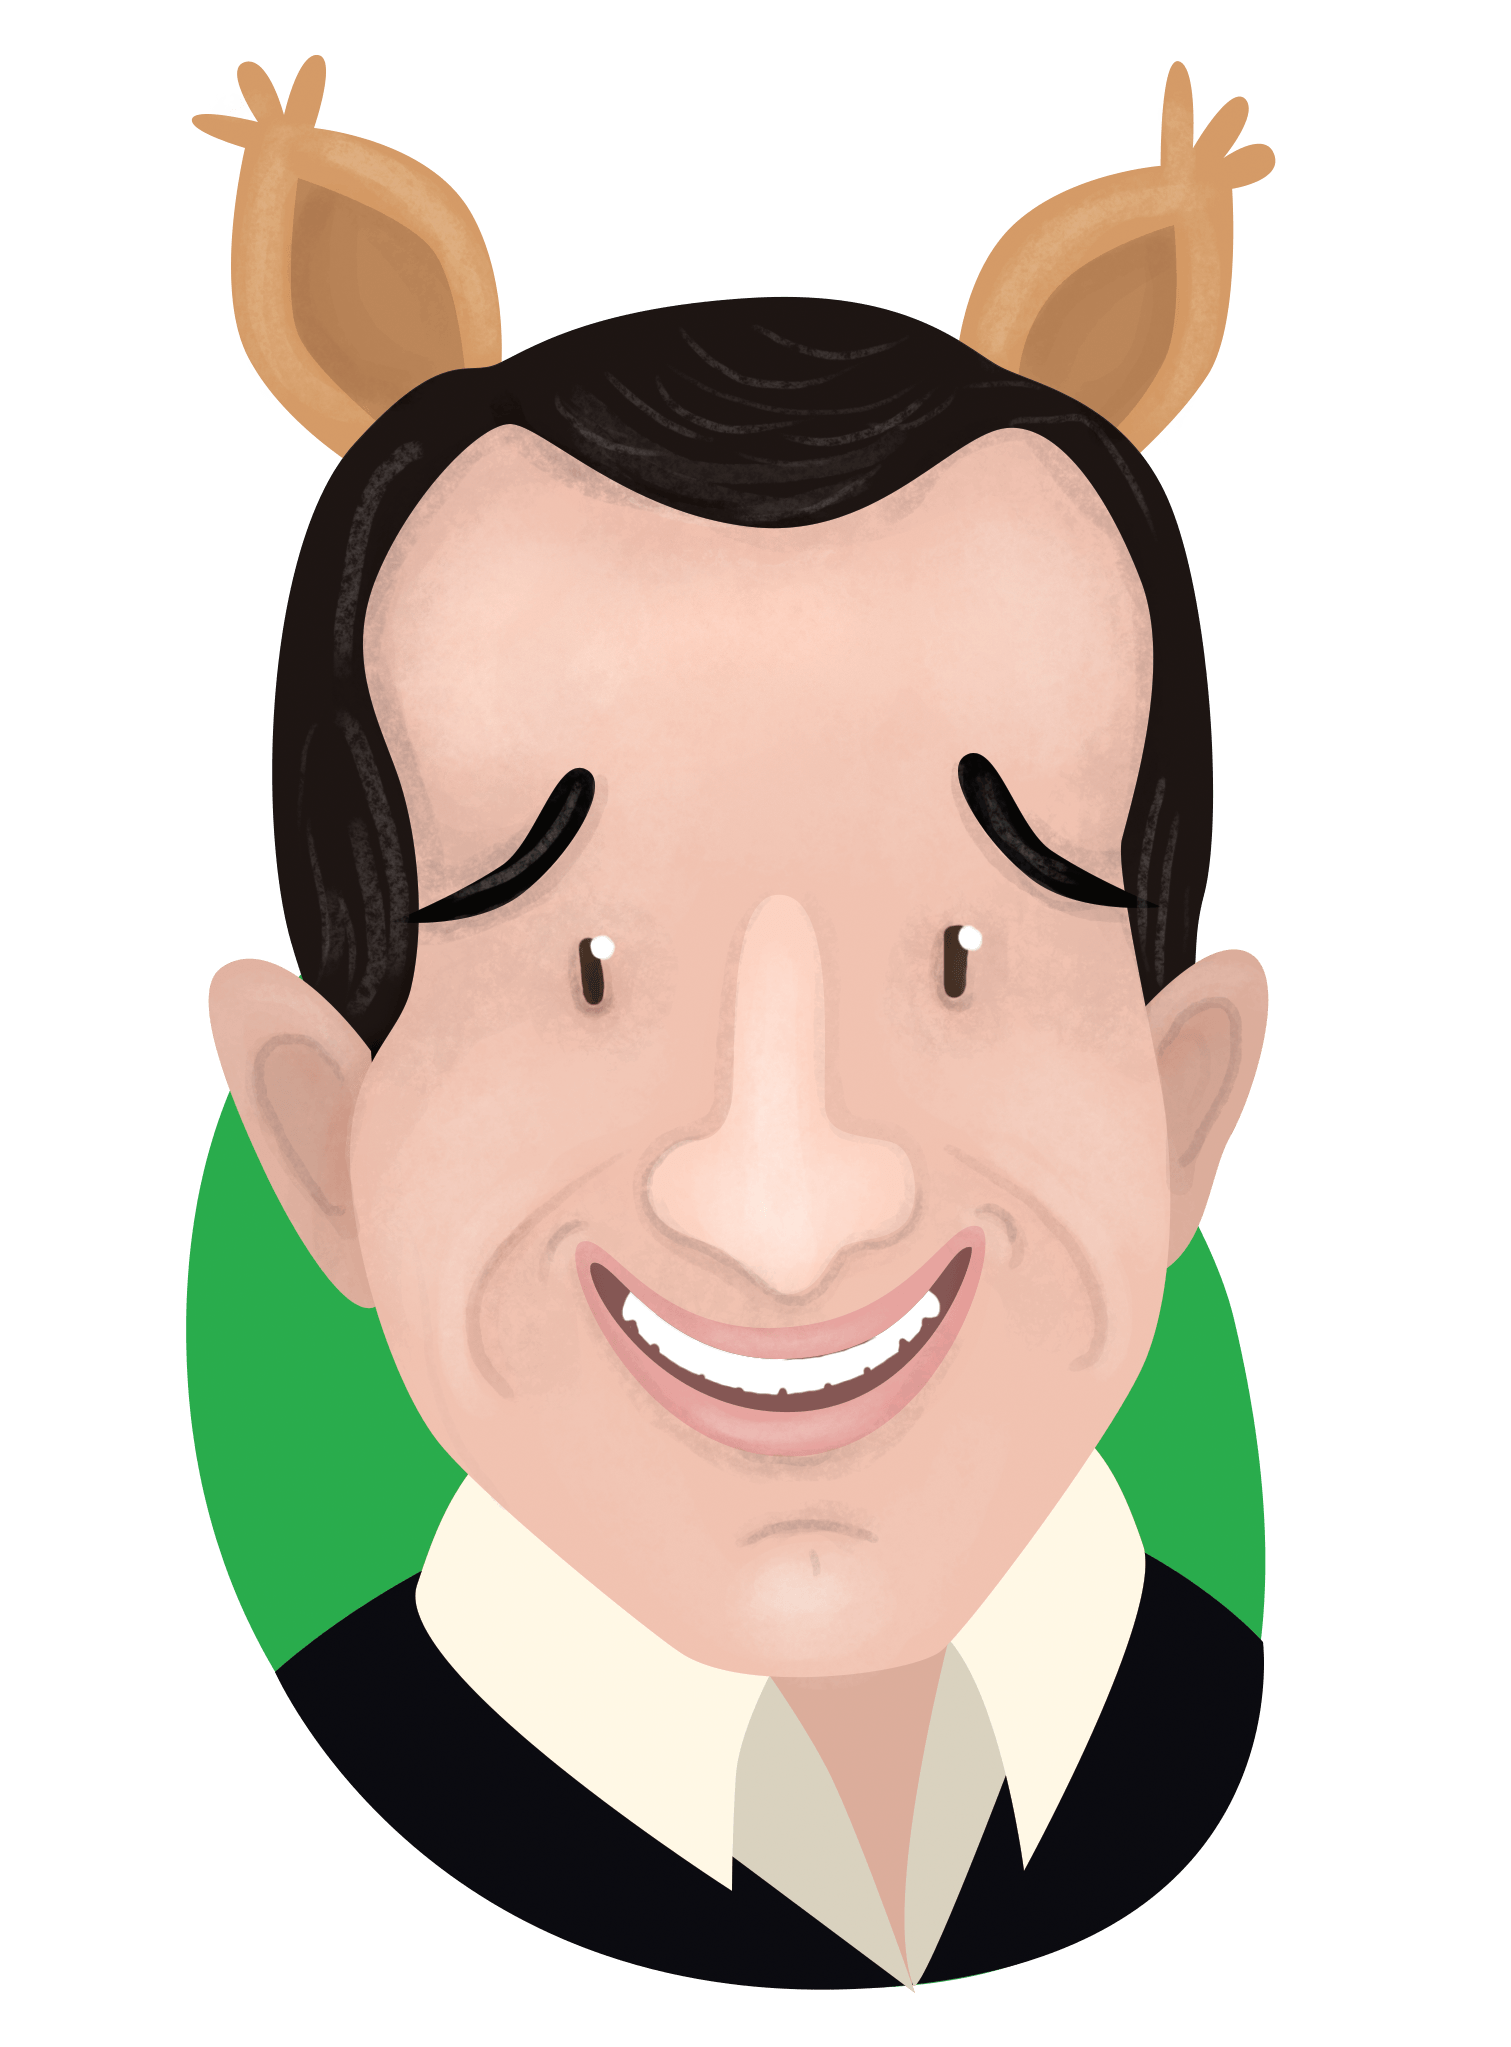 David Bach cartoon with animal ears